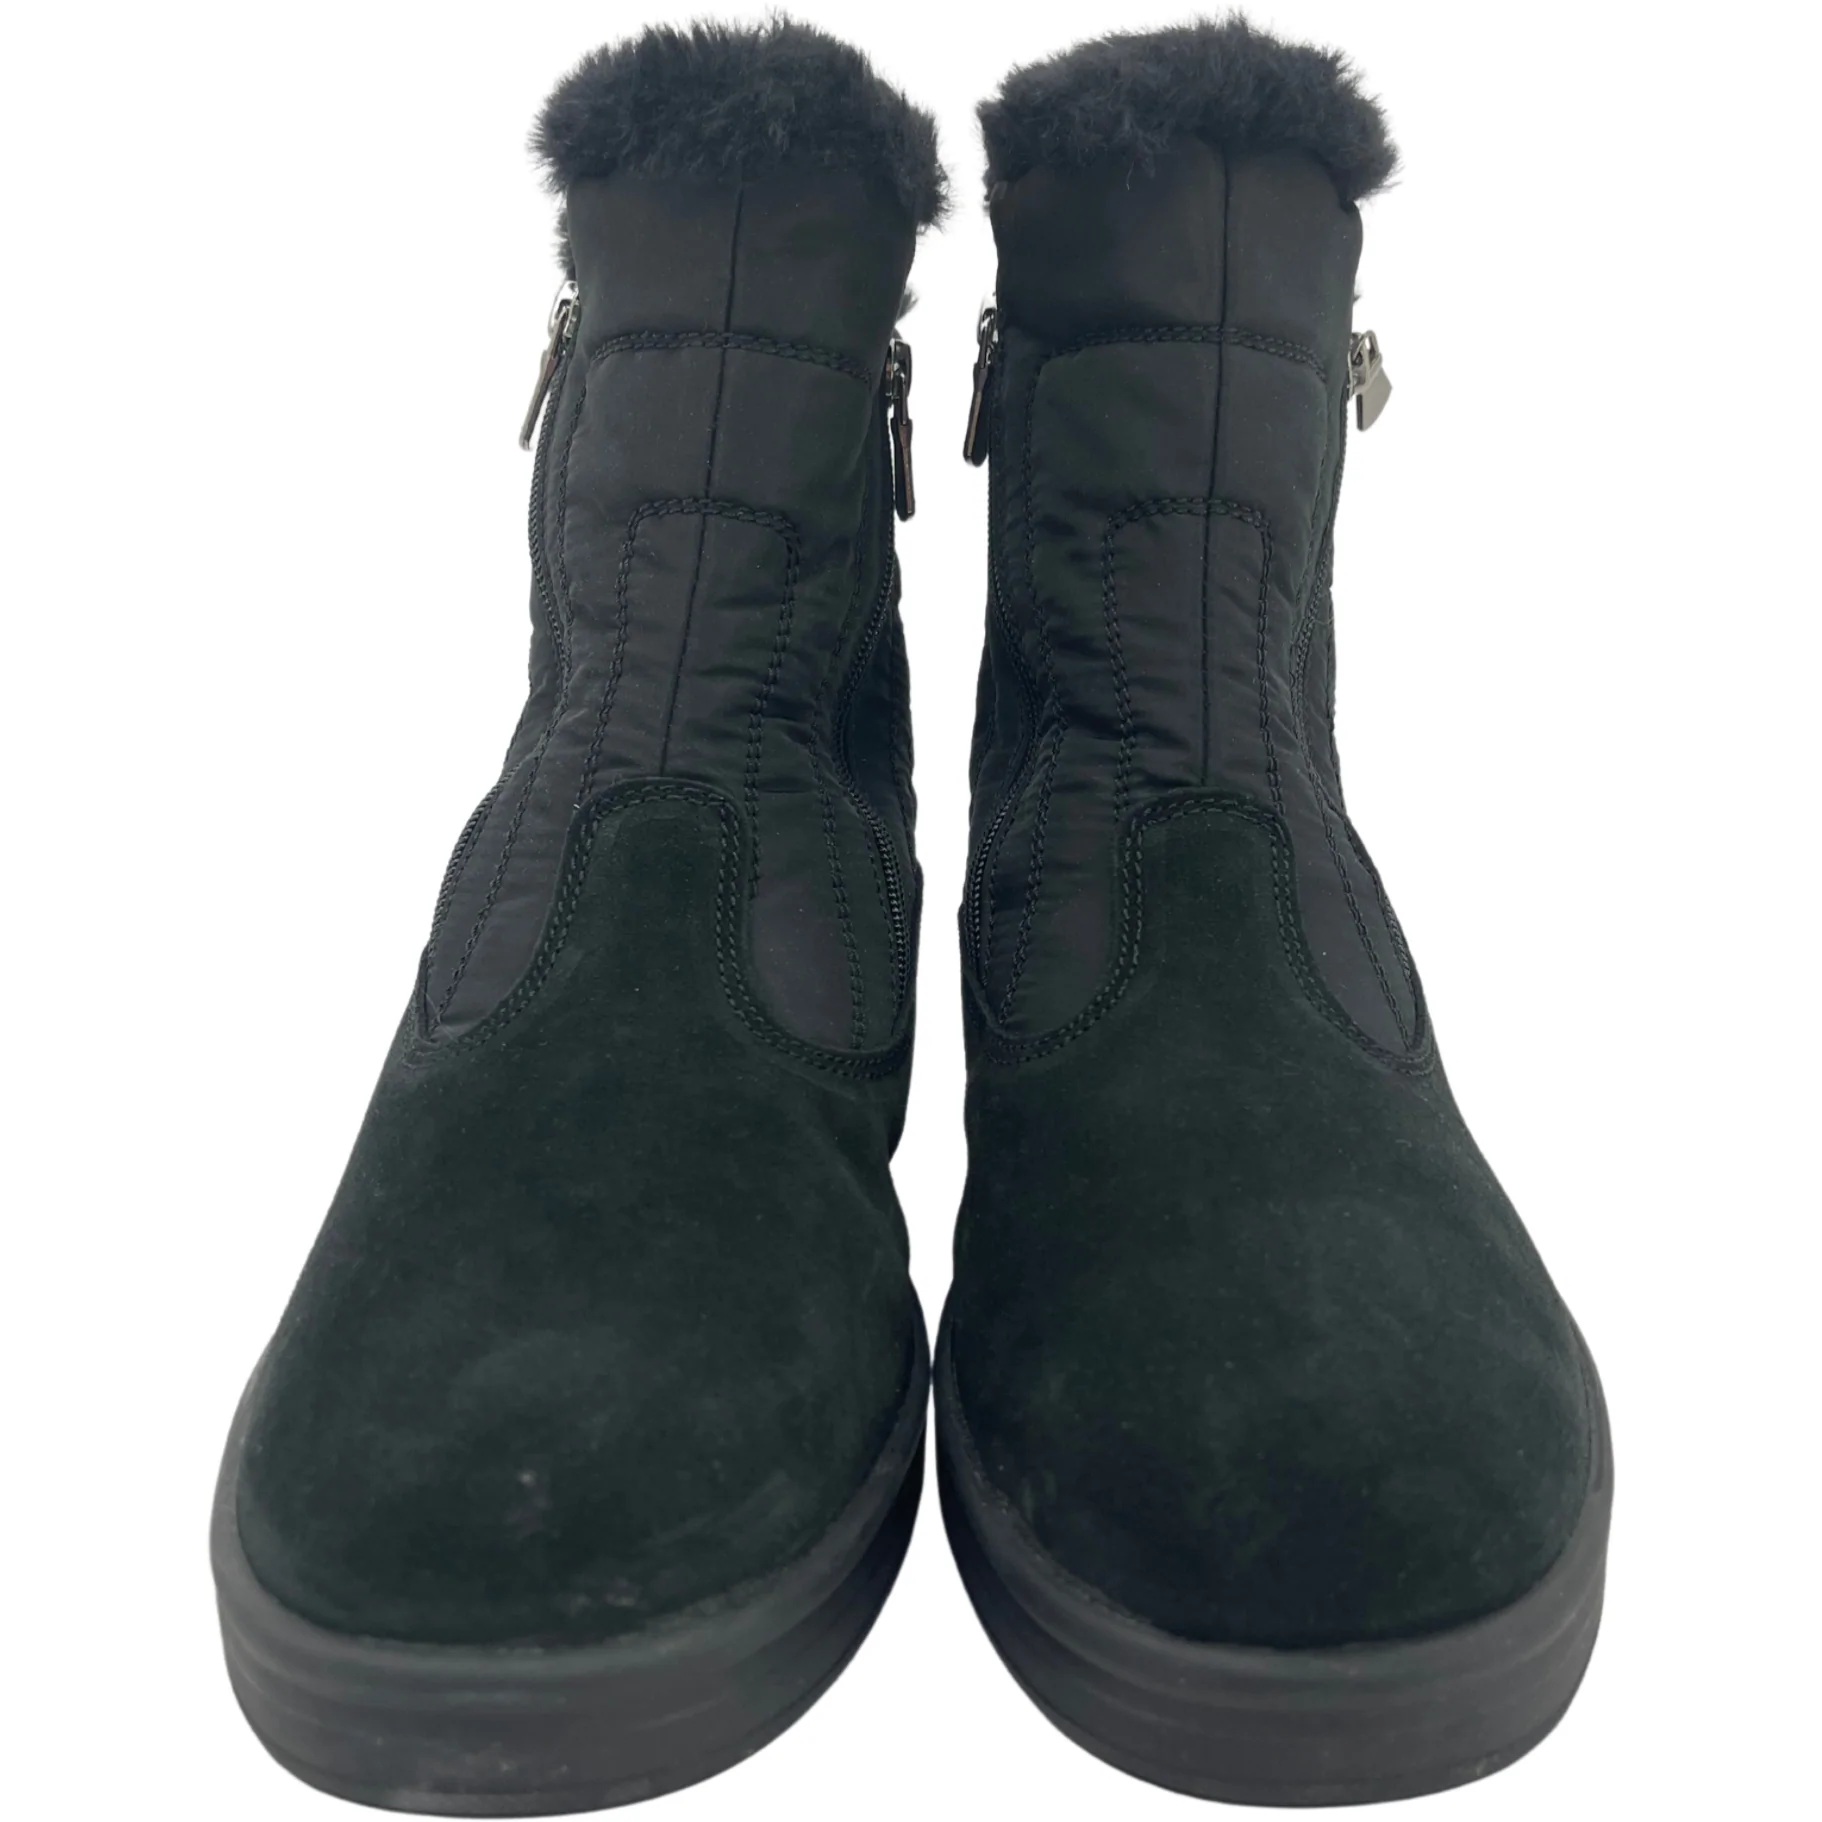 Pajar Women's Ice Gripper Winter Boots / Black / EUR 42 **WORN**